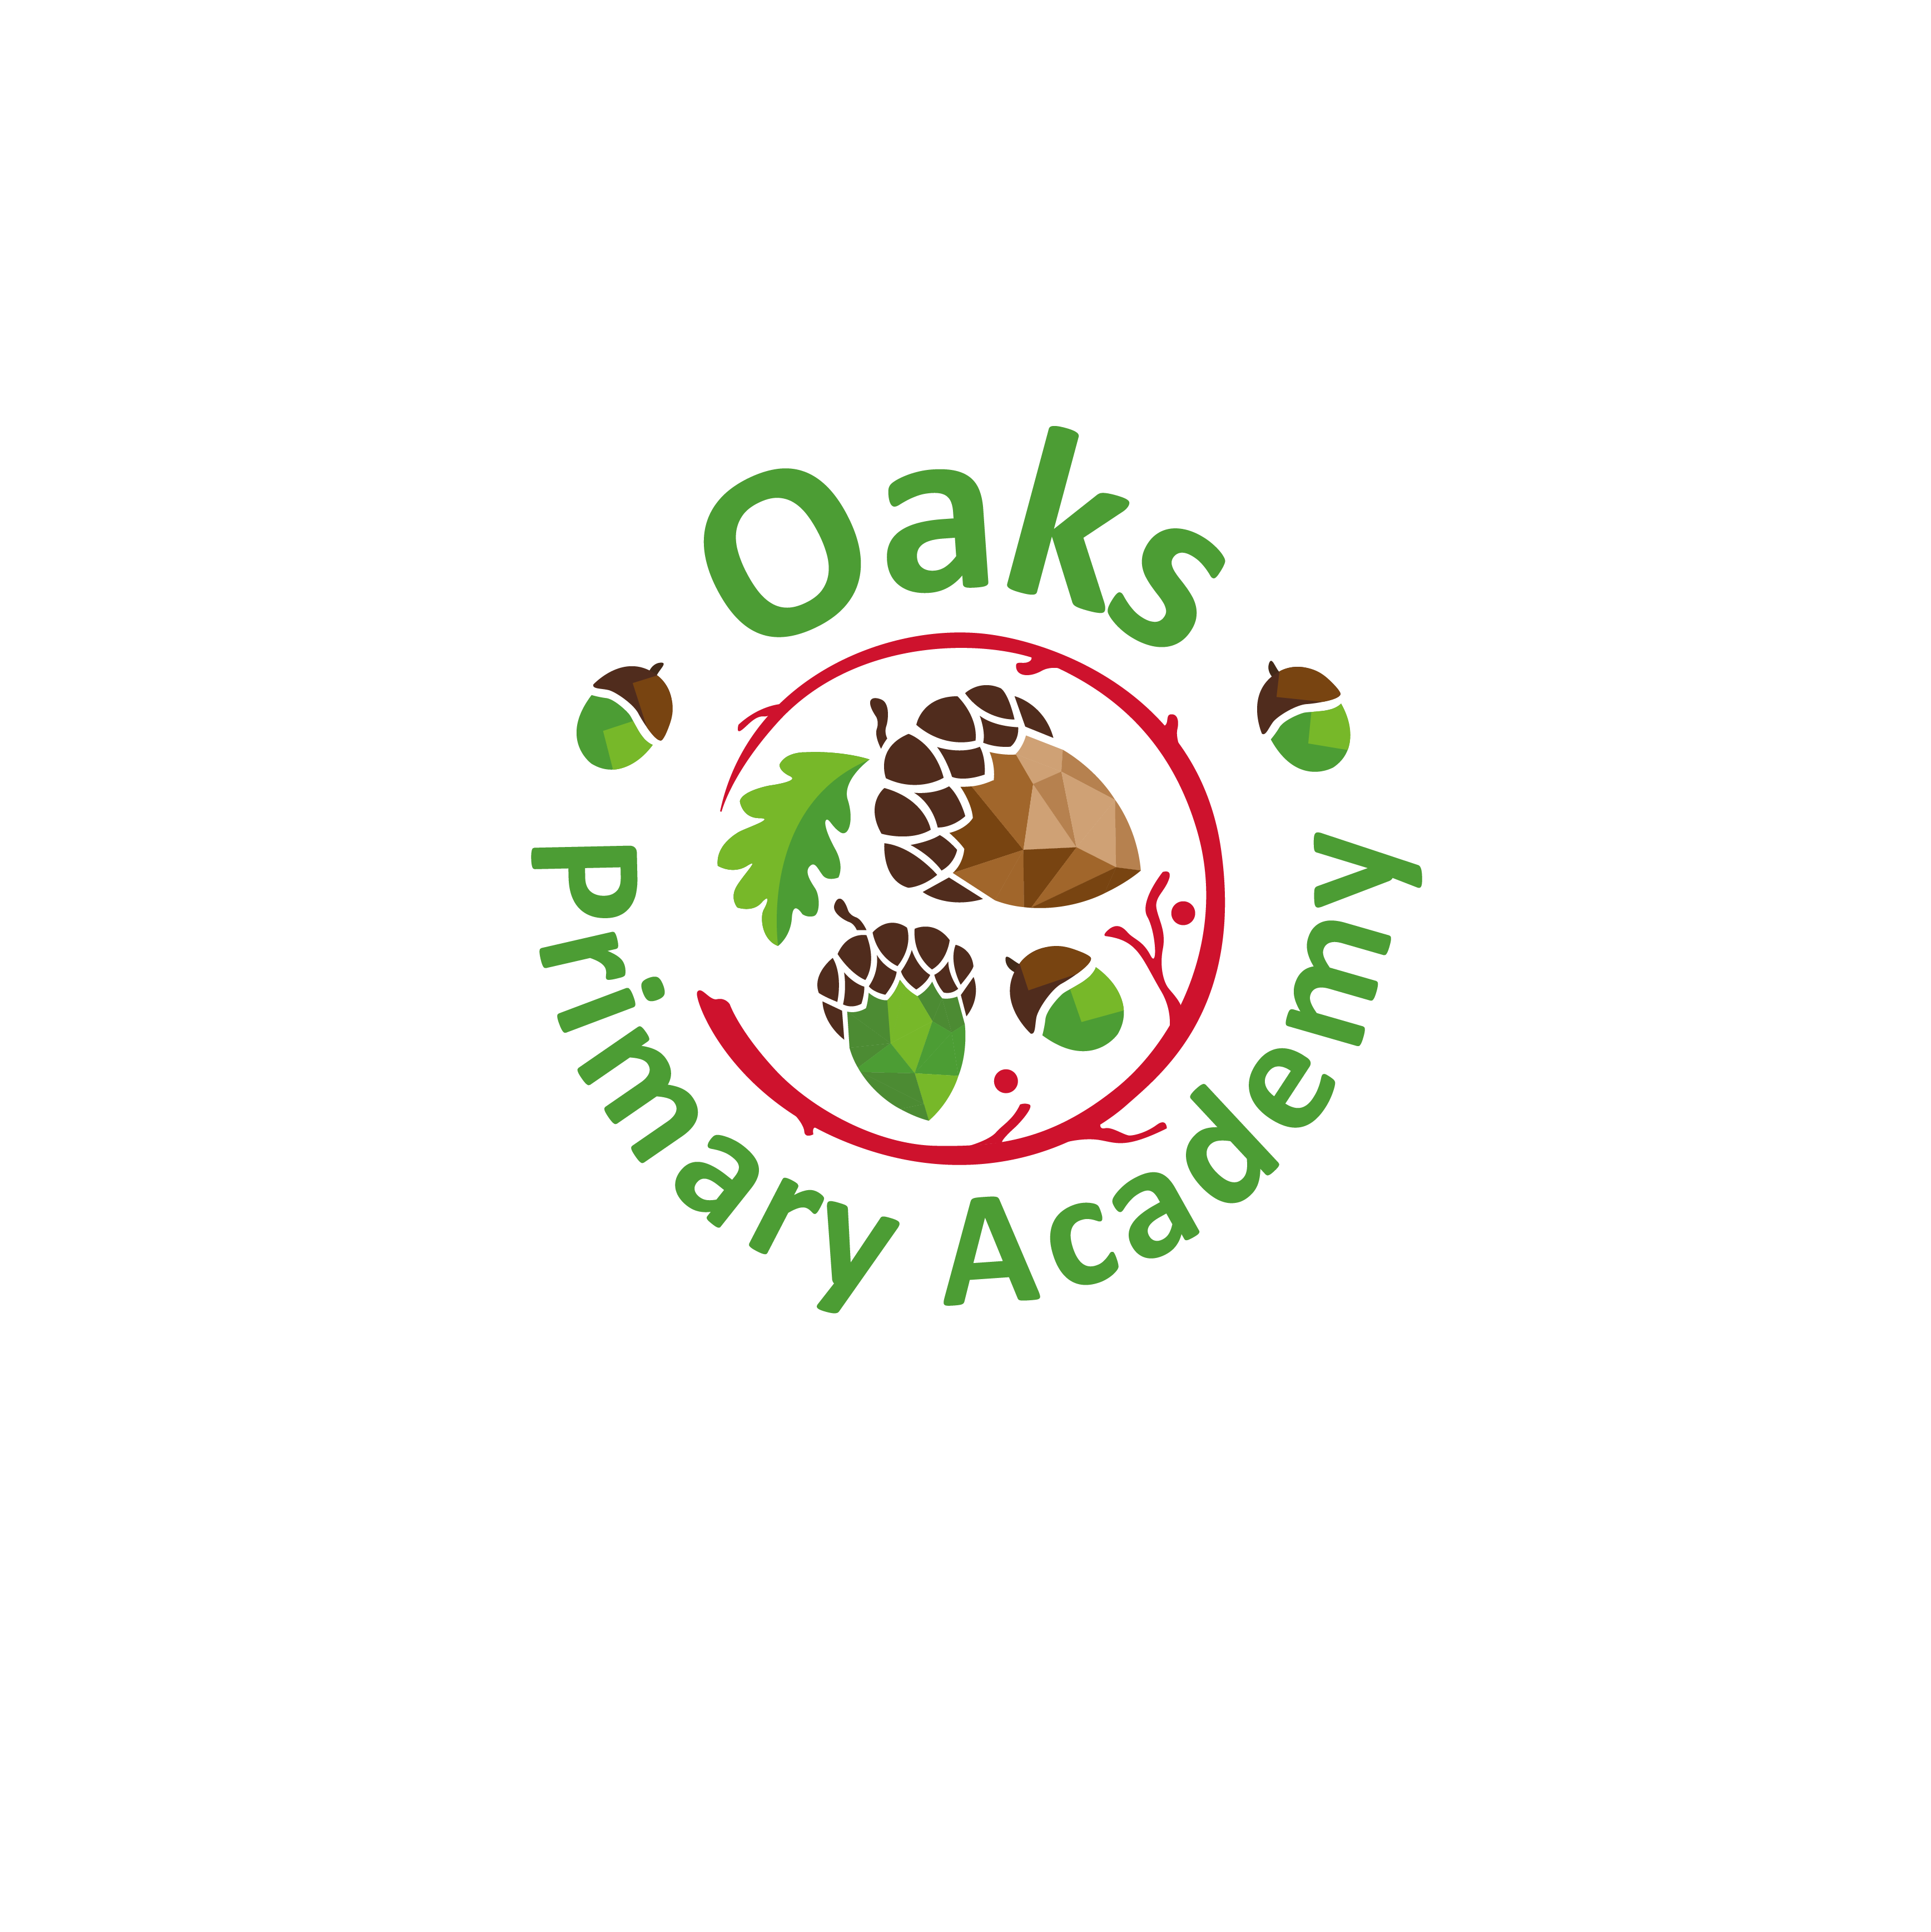 Oaks Primary Academy Logo